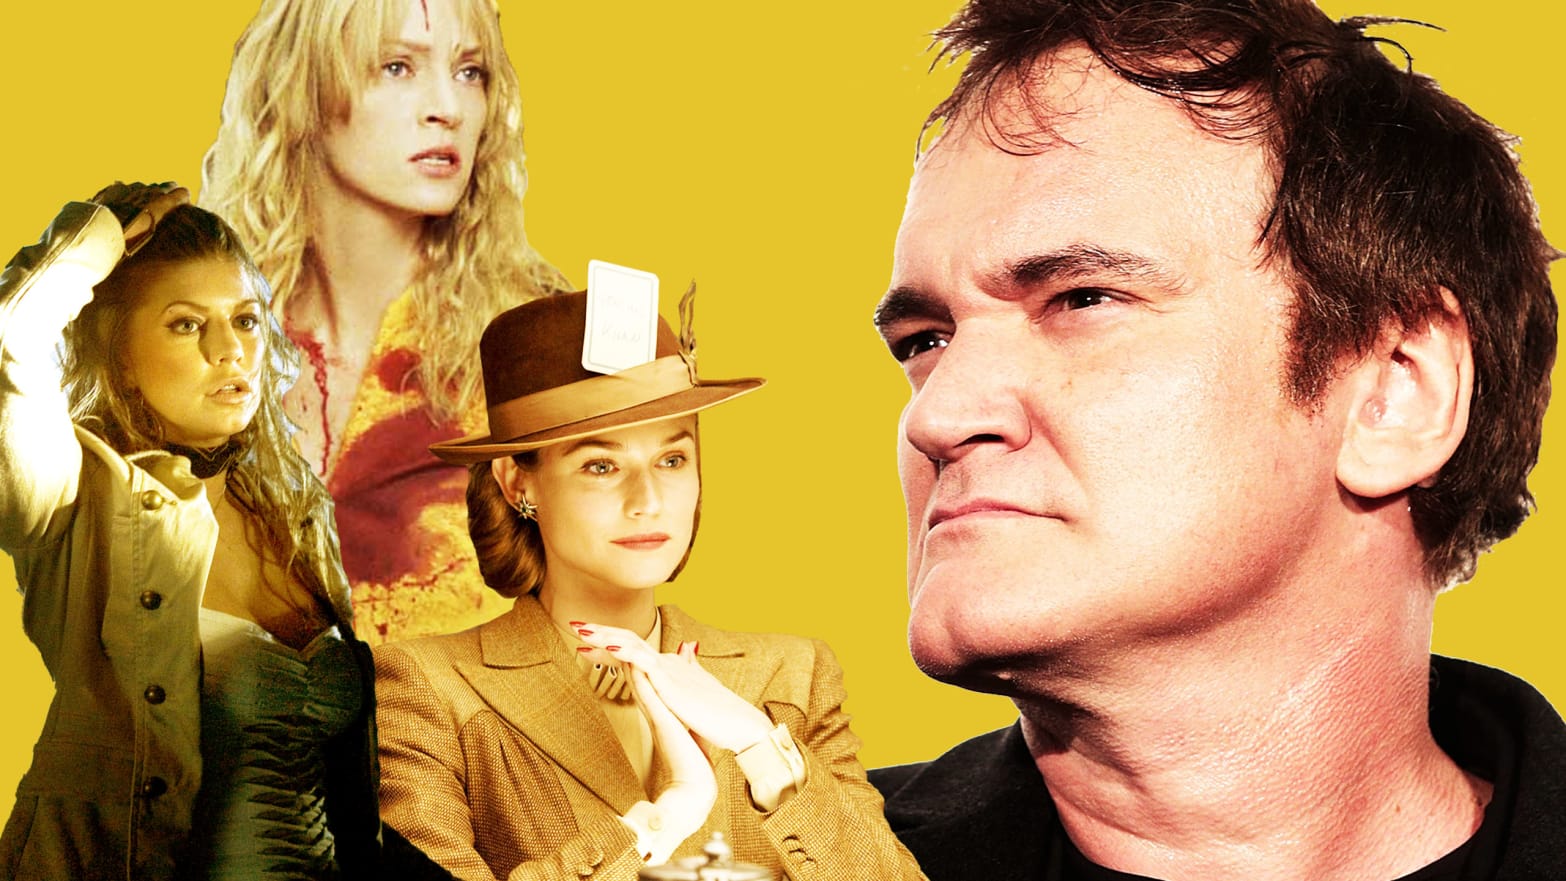 Quentin Tarantino S History Of Disturbing Behavior Toward His